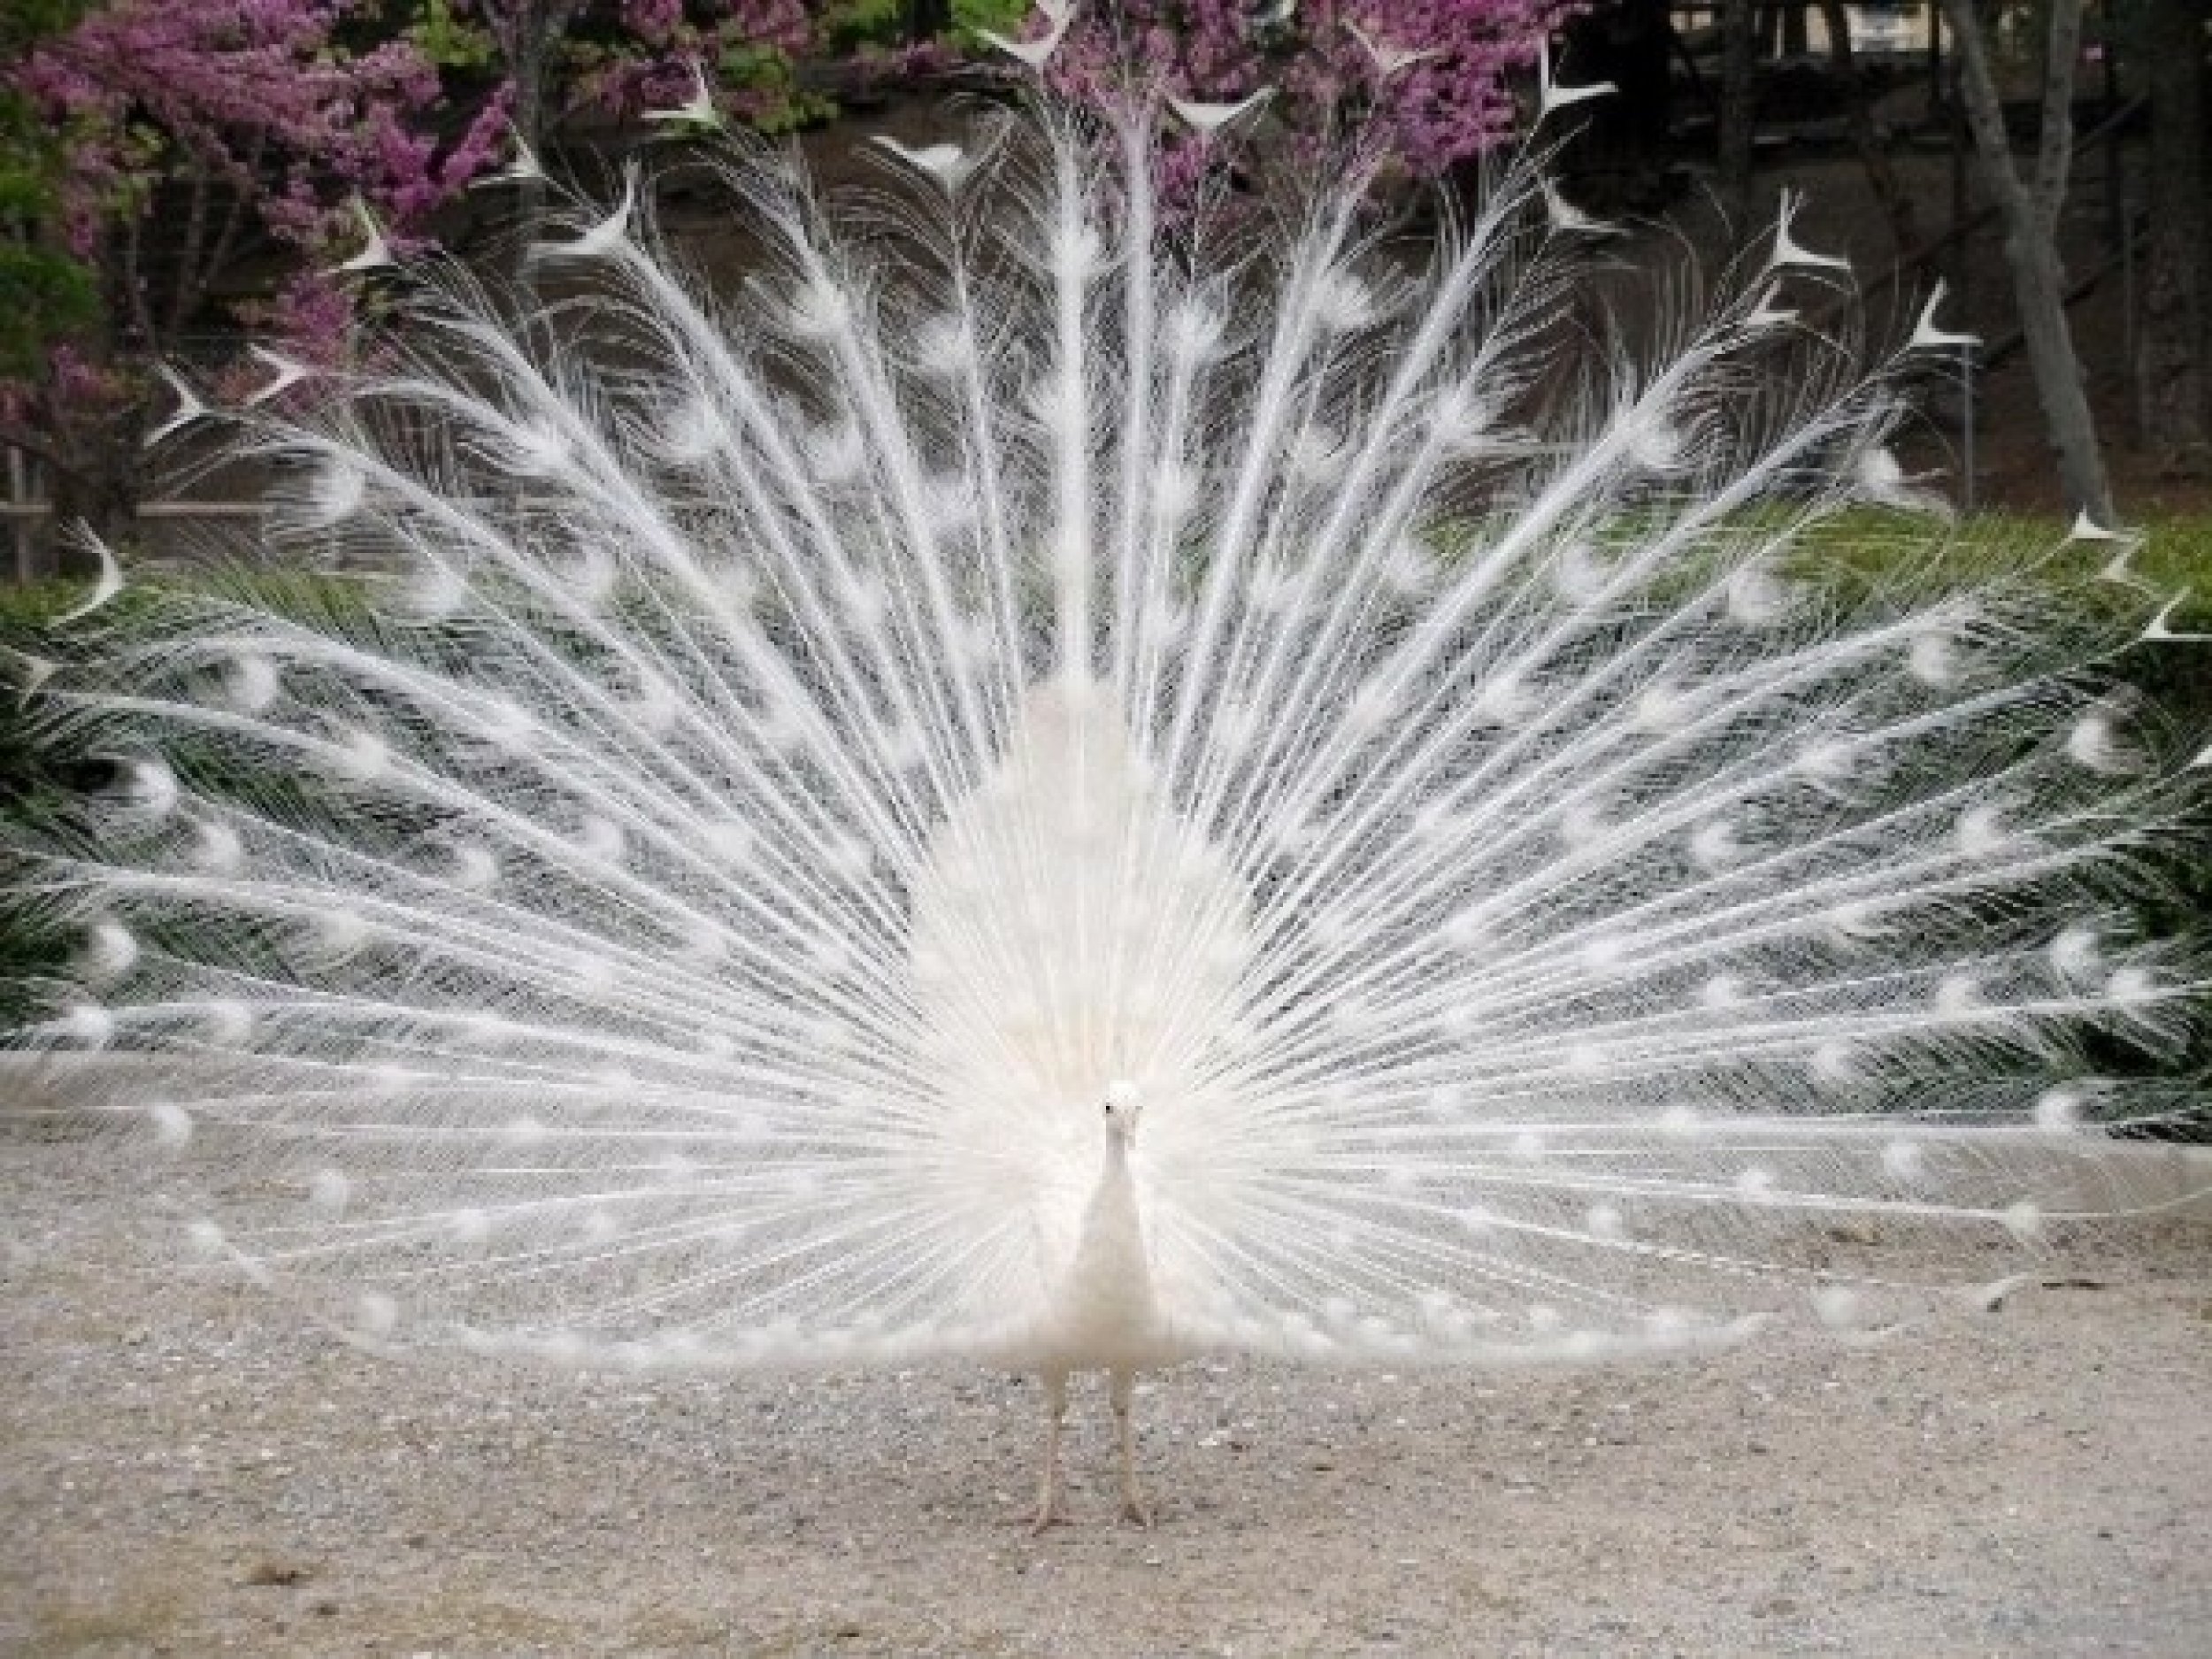 White Peacock